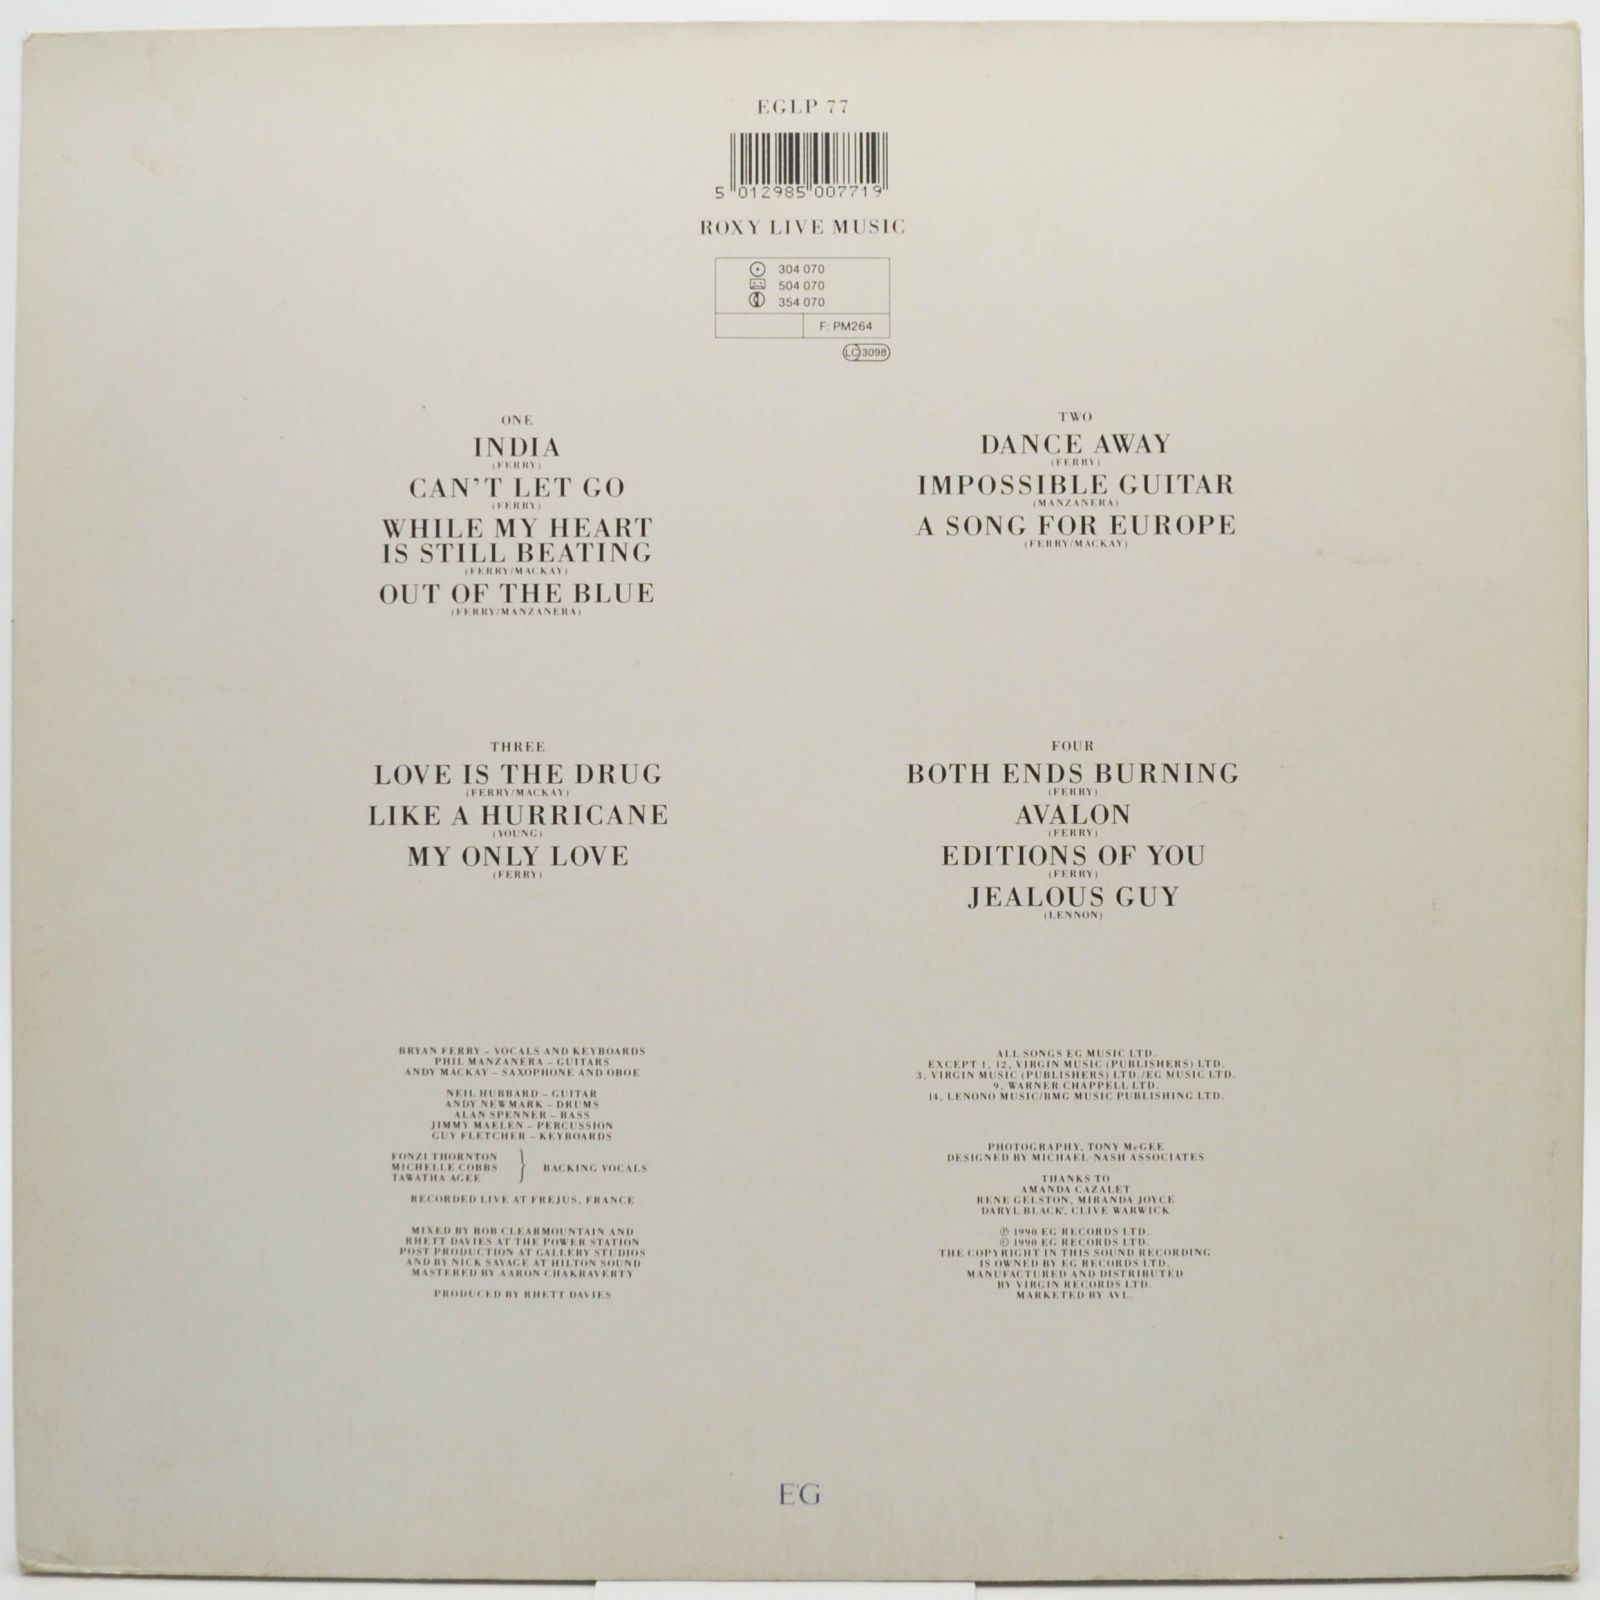 Roxy Music — Heart Still Beating (2LP), 1990